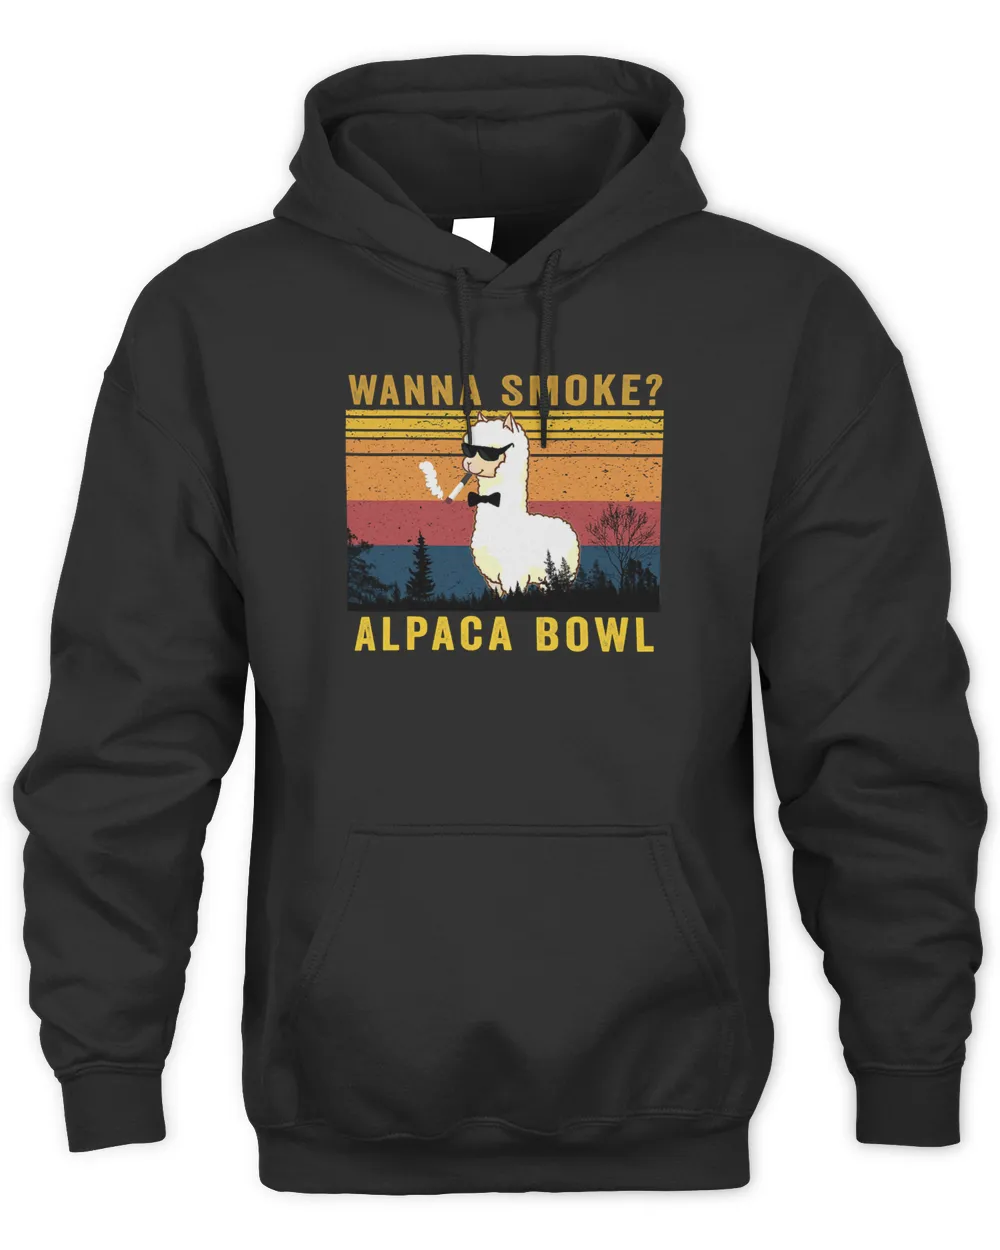 wanna smoke alpaca bowl   alpaca bowls  weed